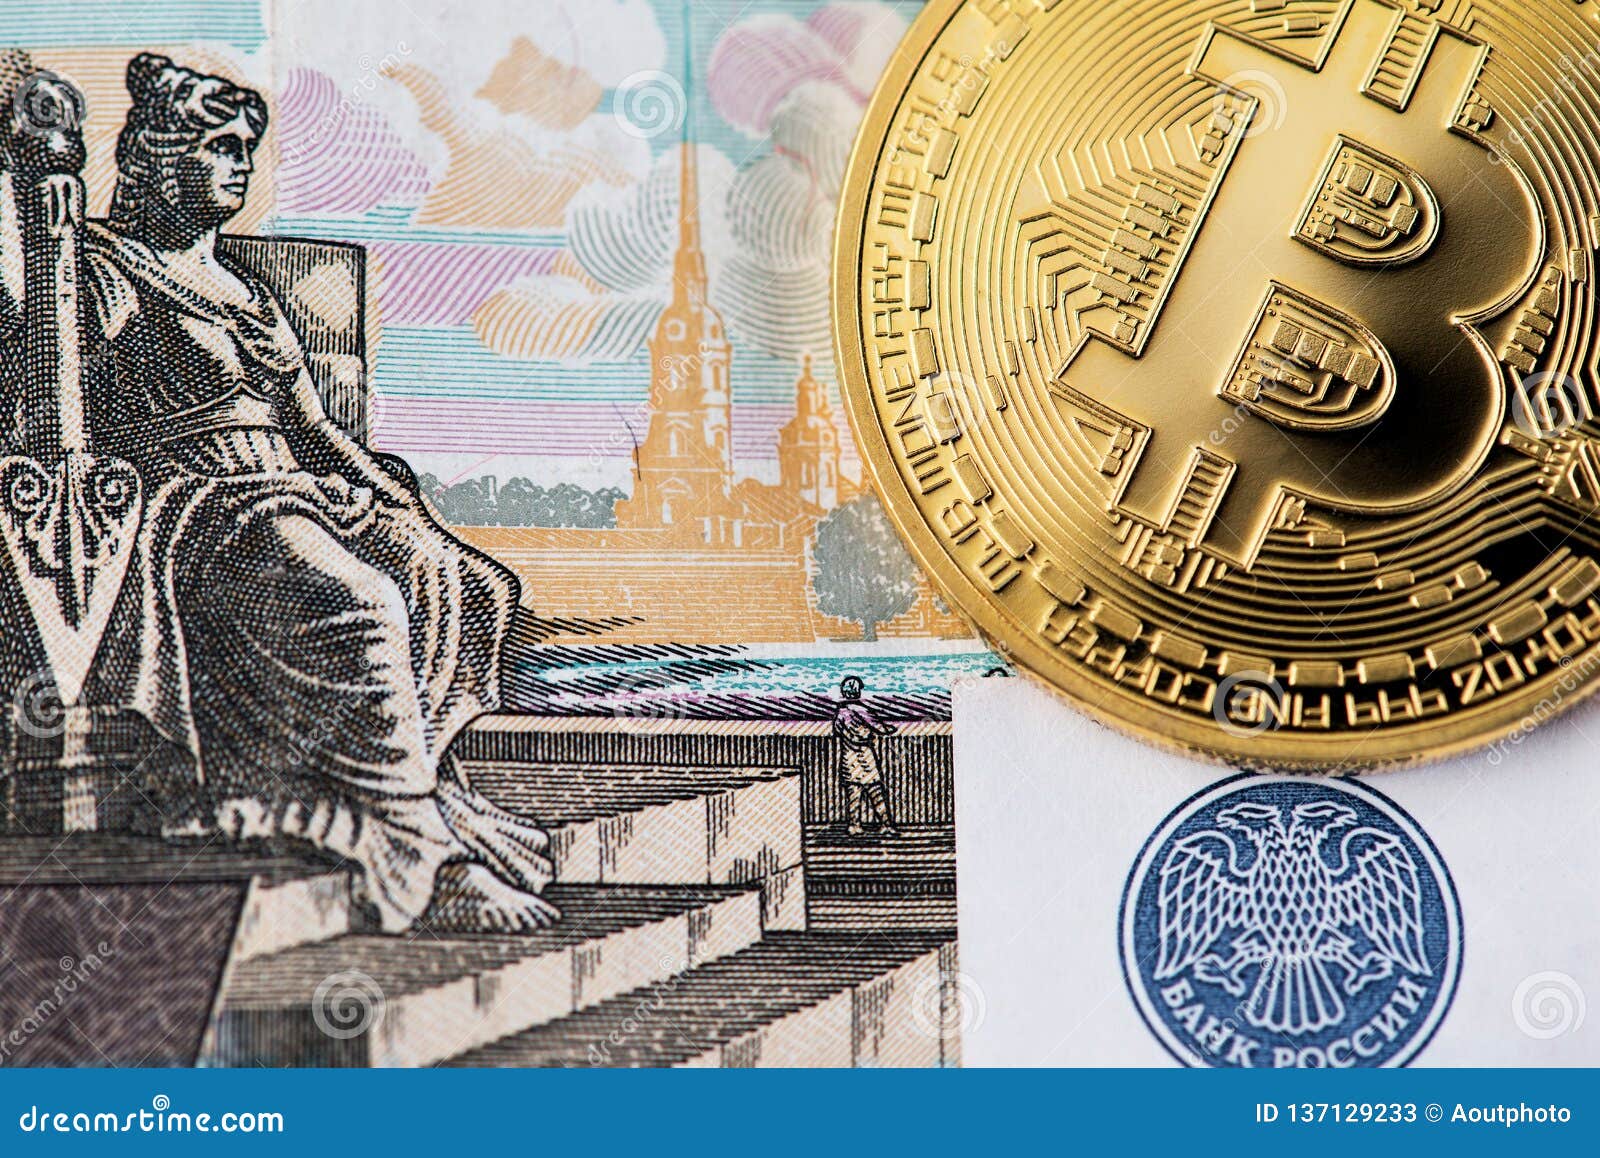 сколько стоит bitcoin на рубли